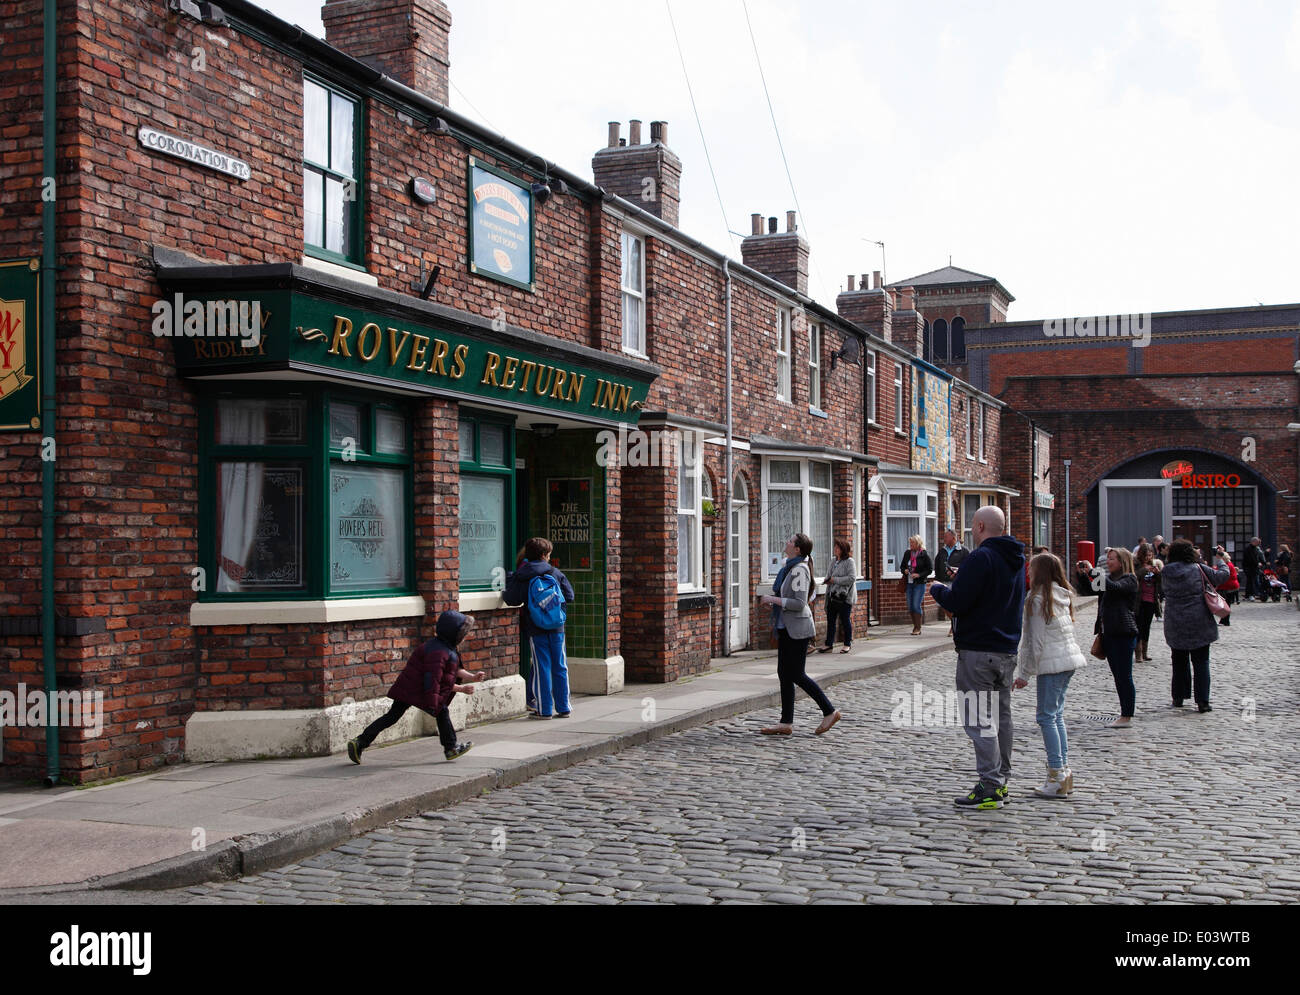 The set of Coronation Street,UK's longest running TV soap opera Rovers Return pub public house Stock Photo